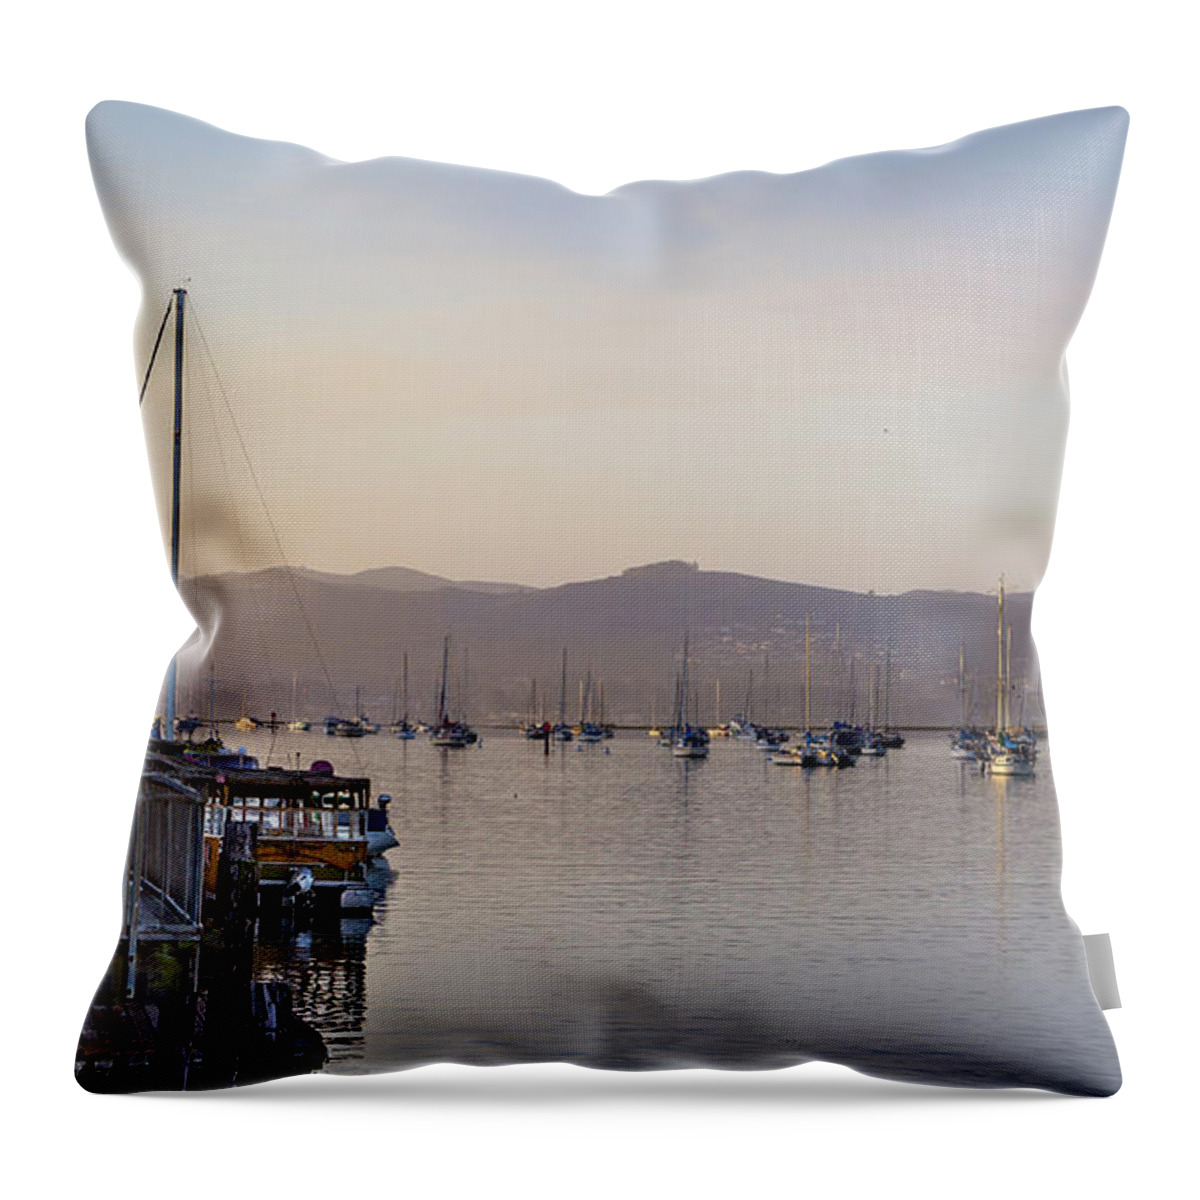 Boats Throw Pillow featuring the photograph The Harbor by Gina Cinardo